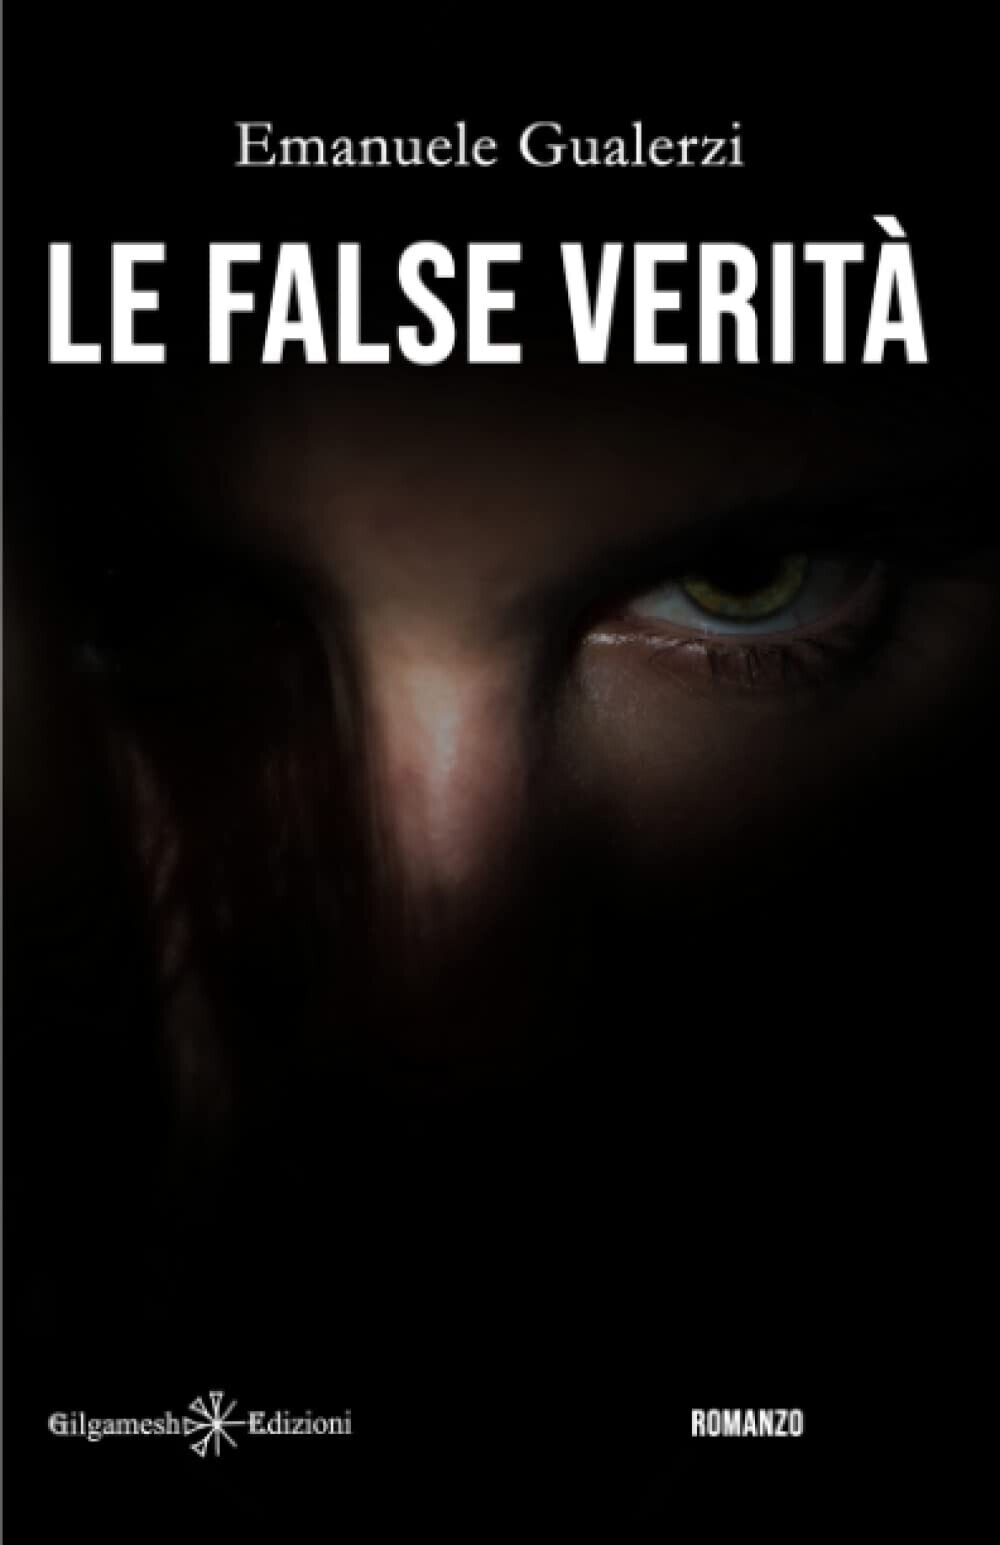 Le false verit? - Emanuele Gualerzi - Gilgamesh Edizioni, 2021 libro usato